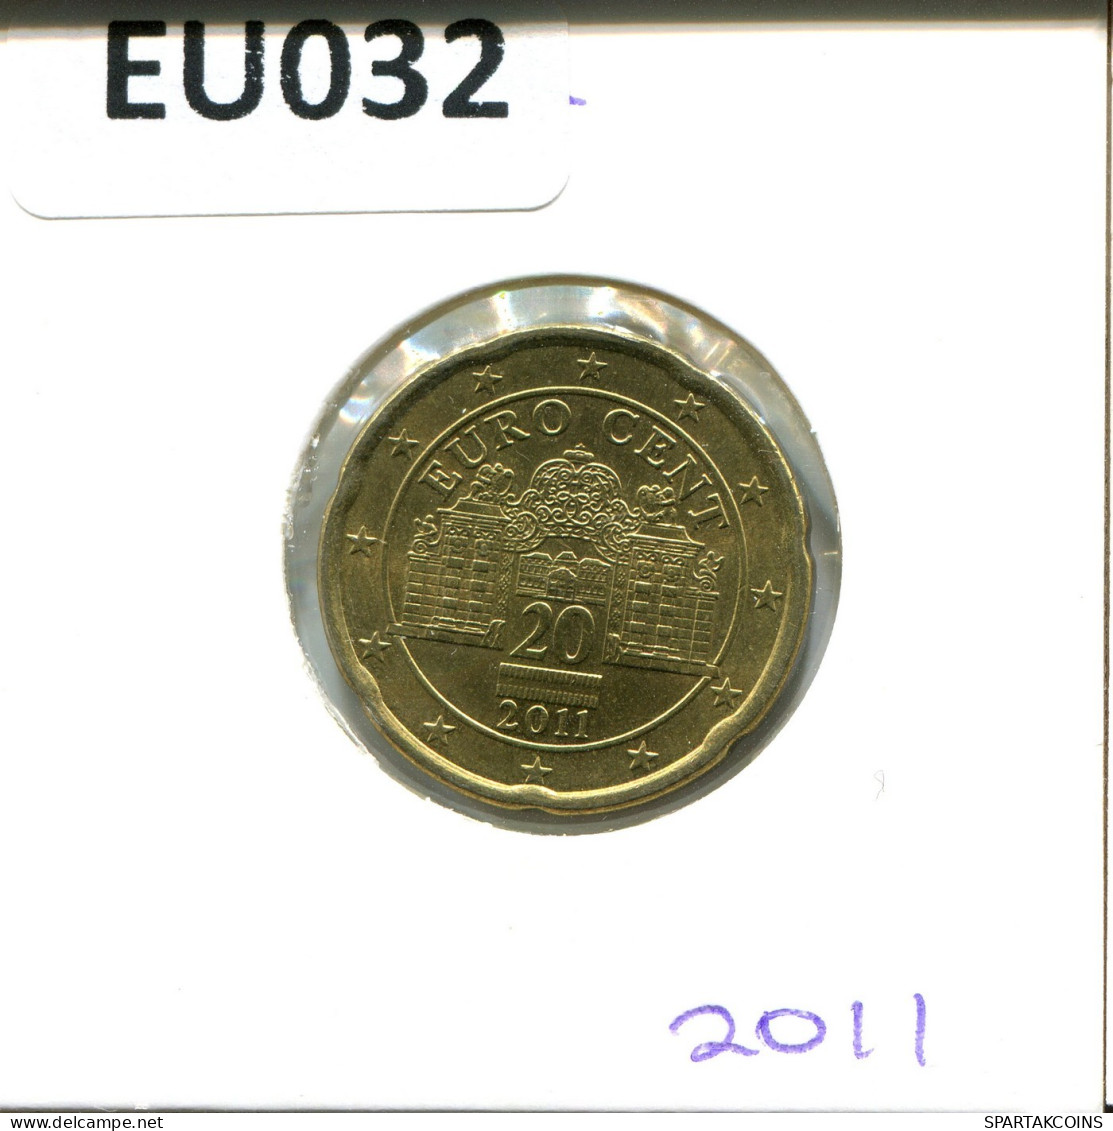 20 EURO CENTS 2011 ÖSTERREICH AUSTRIA Münze #EU032.D.A - Austria